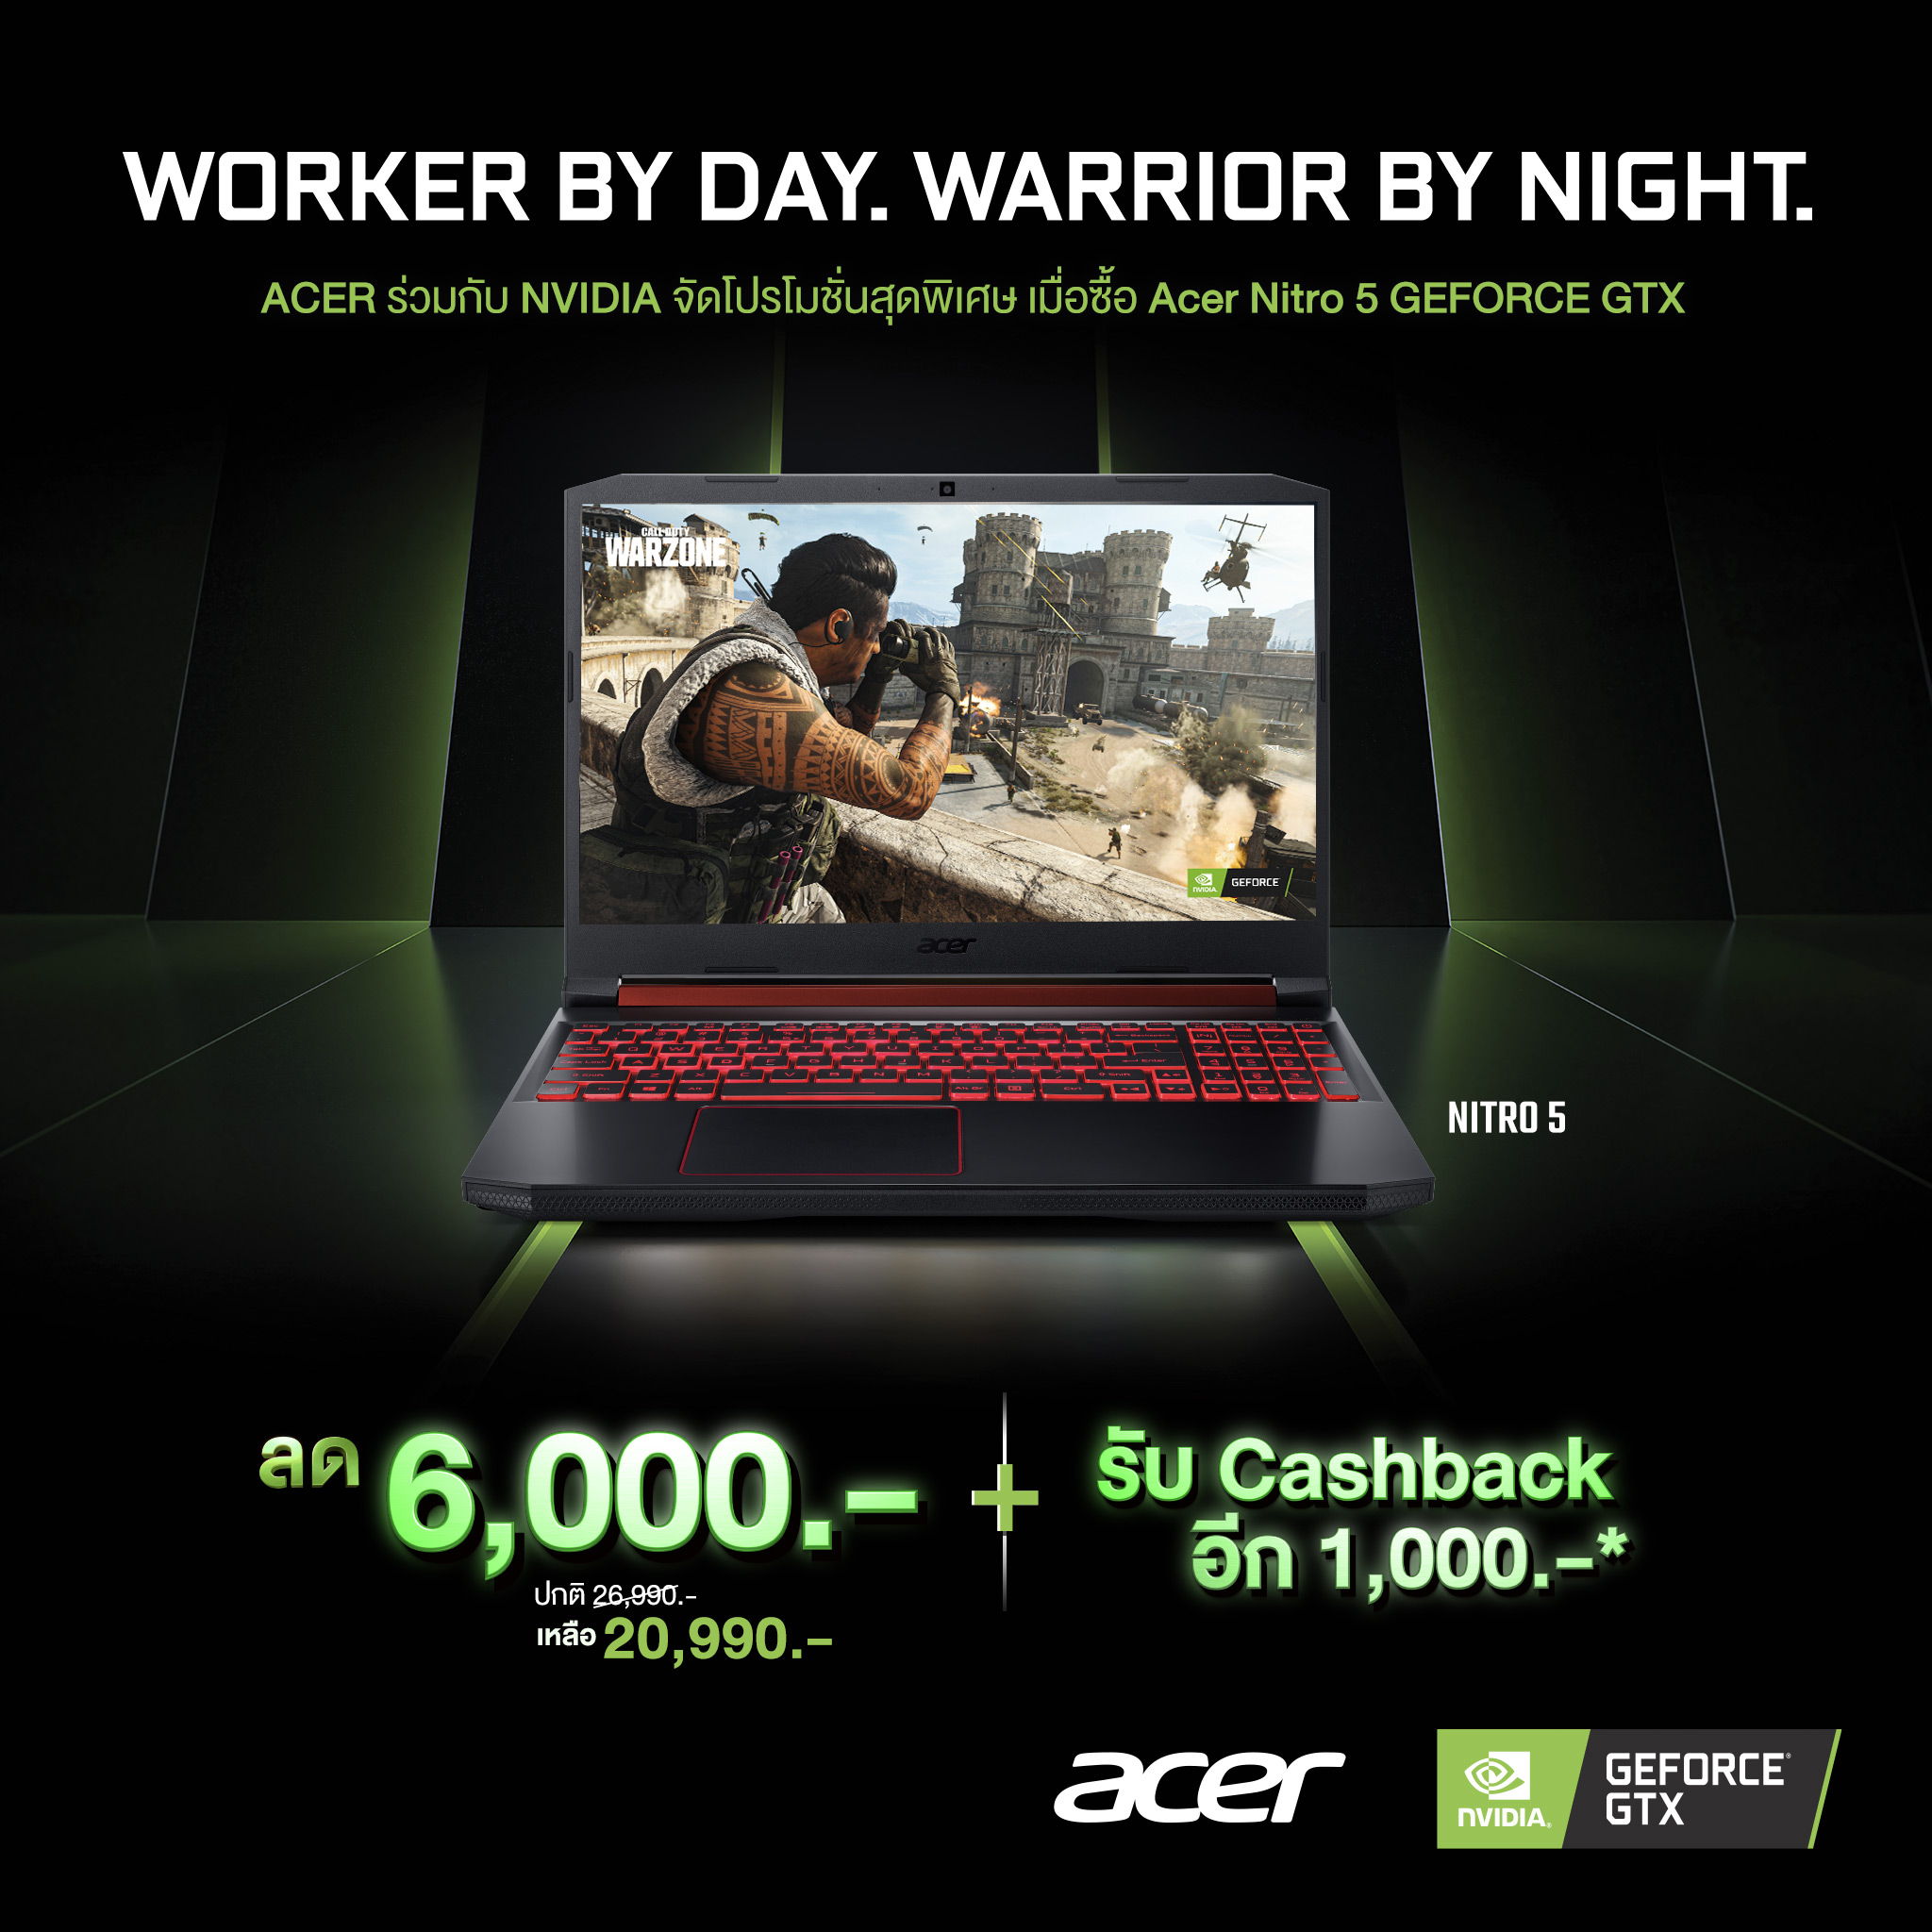 nitro5 gtx web รีบเลย!! ACER ร่วมกับ NVIDIA จัดโปรโมชั่นสุดพิเศษ ให้คุณเป็น “Worker By Day   Warrior By Night ” กับโน๊ตบุ๊ค Acer Nitro 5 กับขุมพลัง GEFORCE GTX 1050 พร้อมลดราคาพิเศษถึง 6,000 บาทกันเลยทีเดียว 